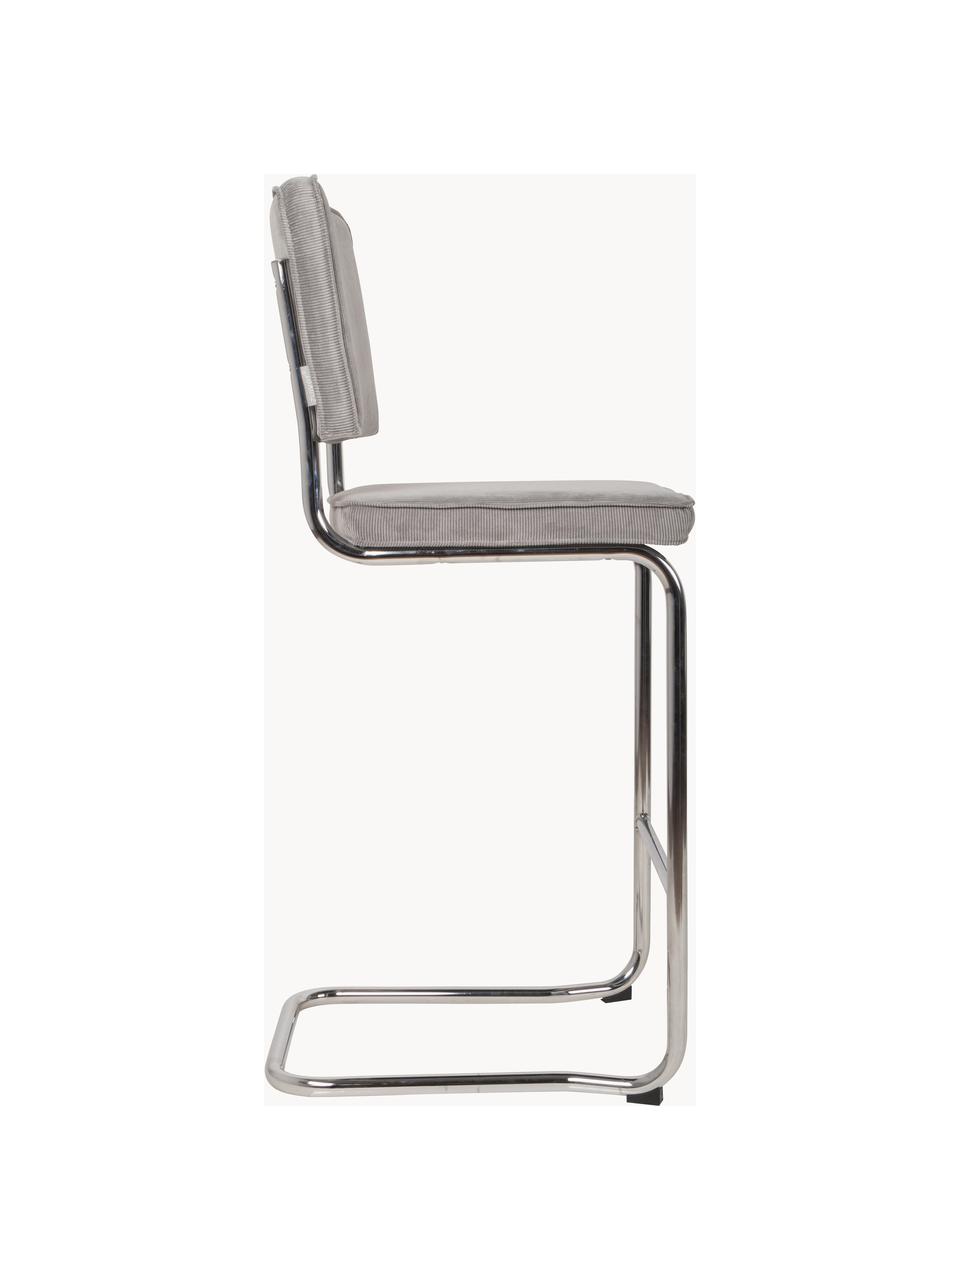 Barová židle Ridge King Barstool, Světle šedá, Š 50 cm, H 113 cm